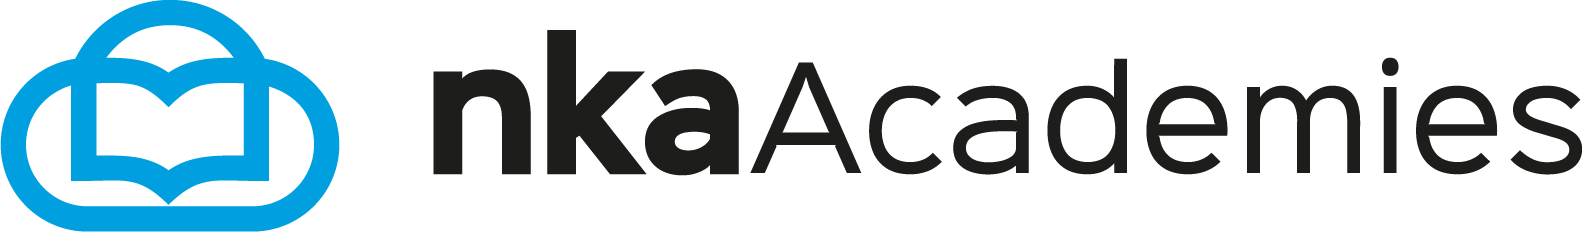 CloudAcademies logo